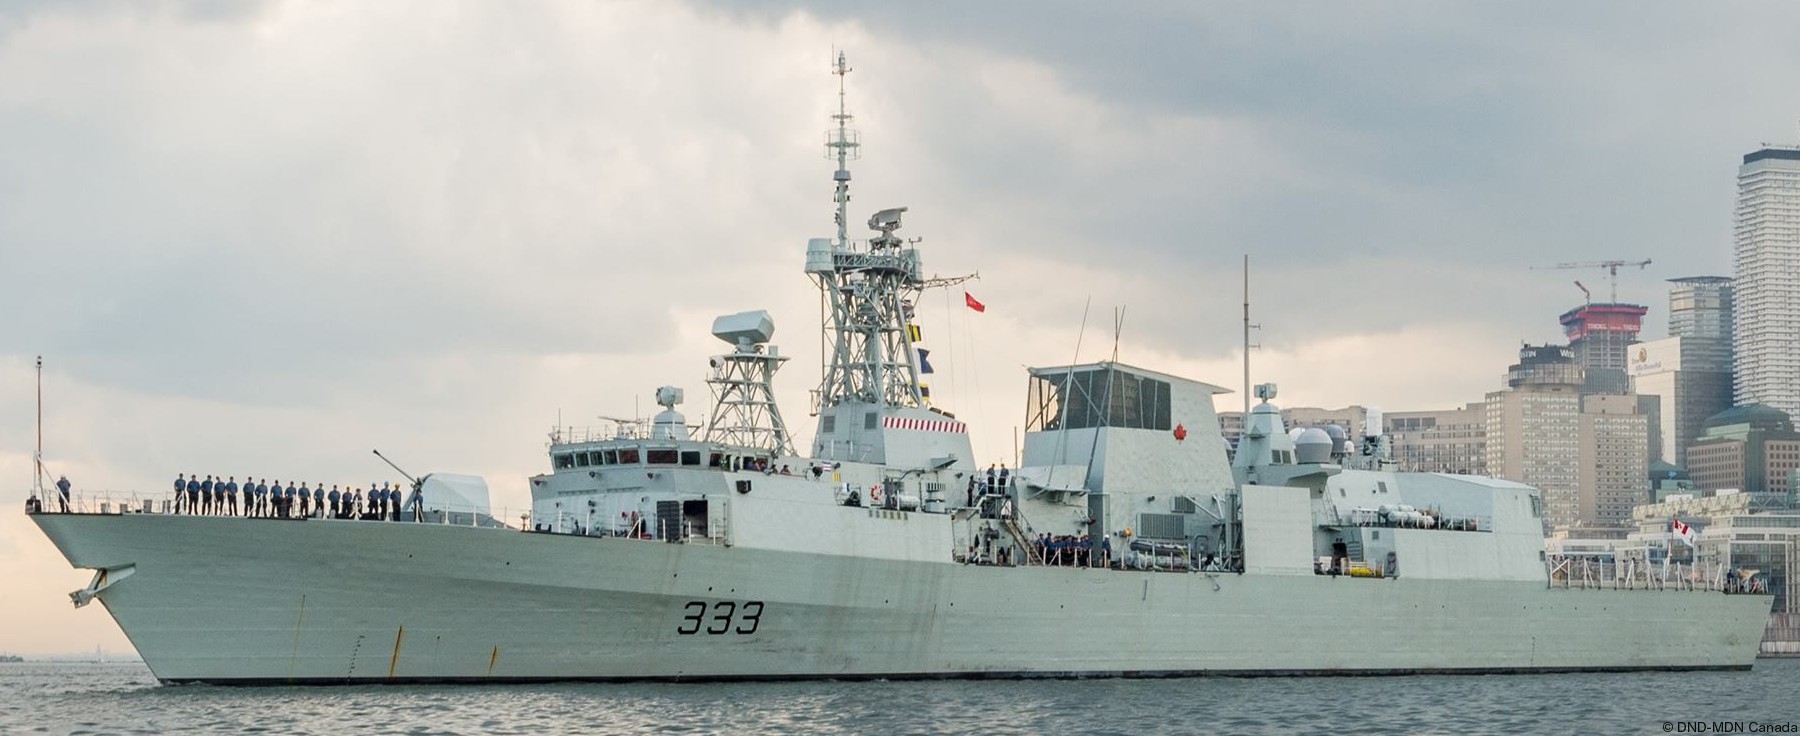 ffh-333 hmcs toronto halifax class helicopter patrol frigate ncsm royal canadian navy 25